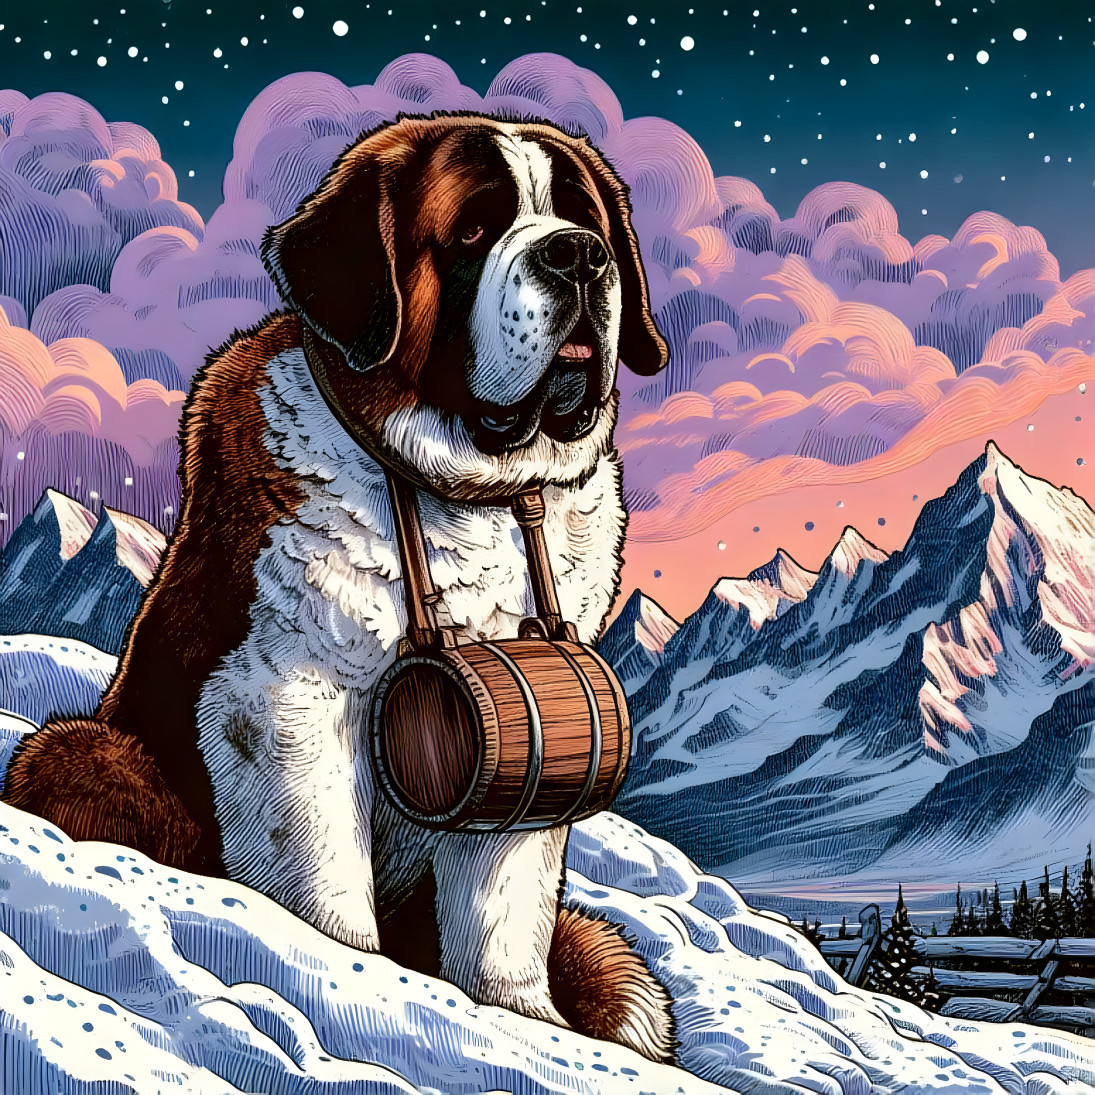  Saint Bernard Dog in snowy Alpine Mountains